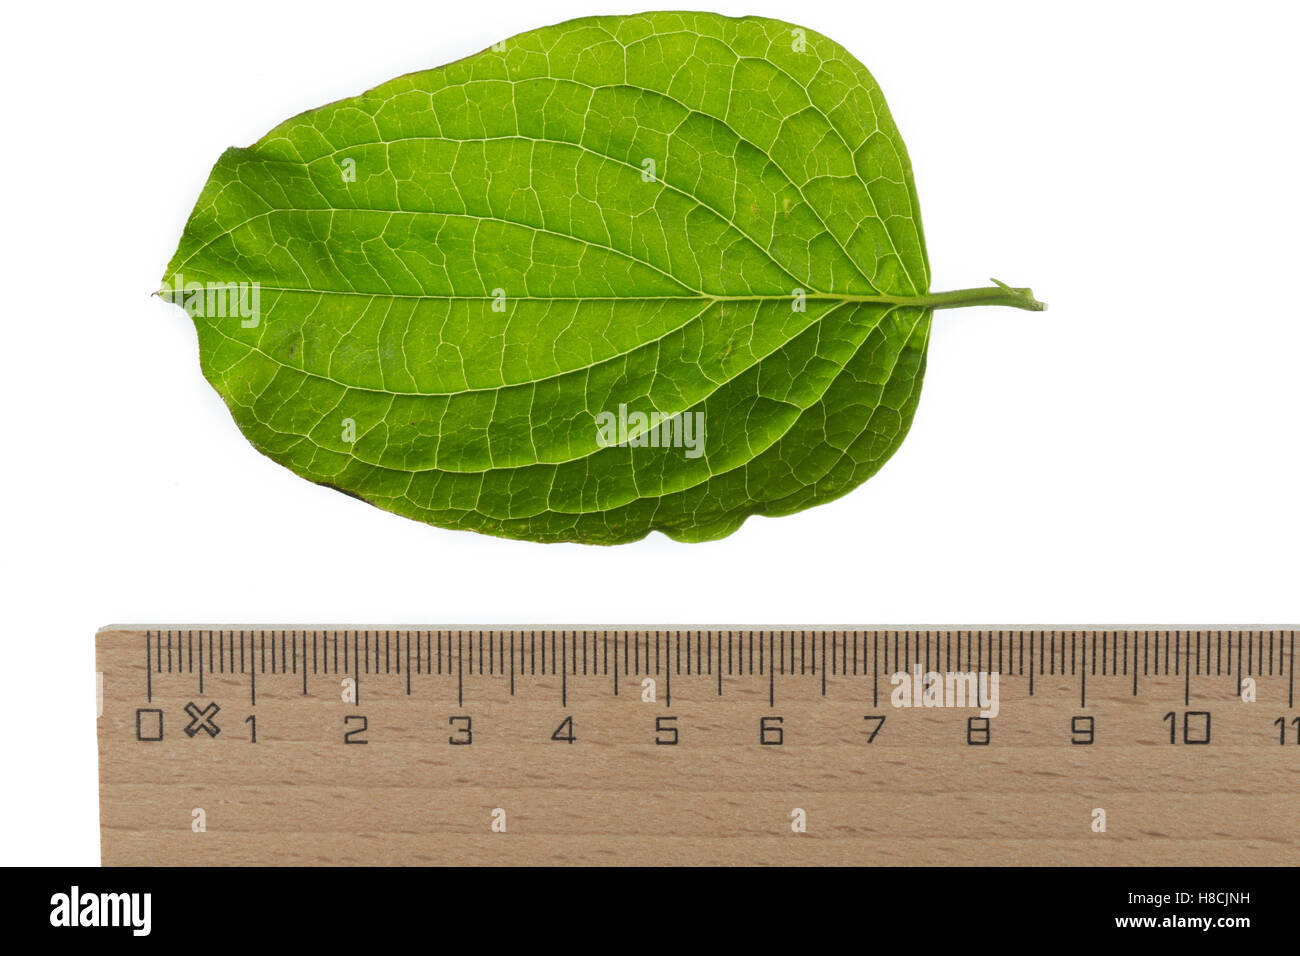 Blutroter Hartriegel, Cornus sanguinea, Common Dogwood, Dogberry, Cornouiller sanguin. Blatt, Blätter, leaf, leaves Stock Photo